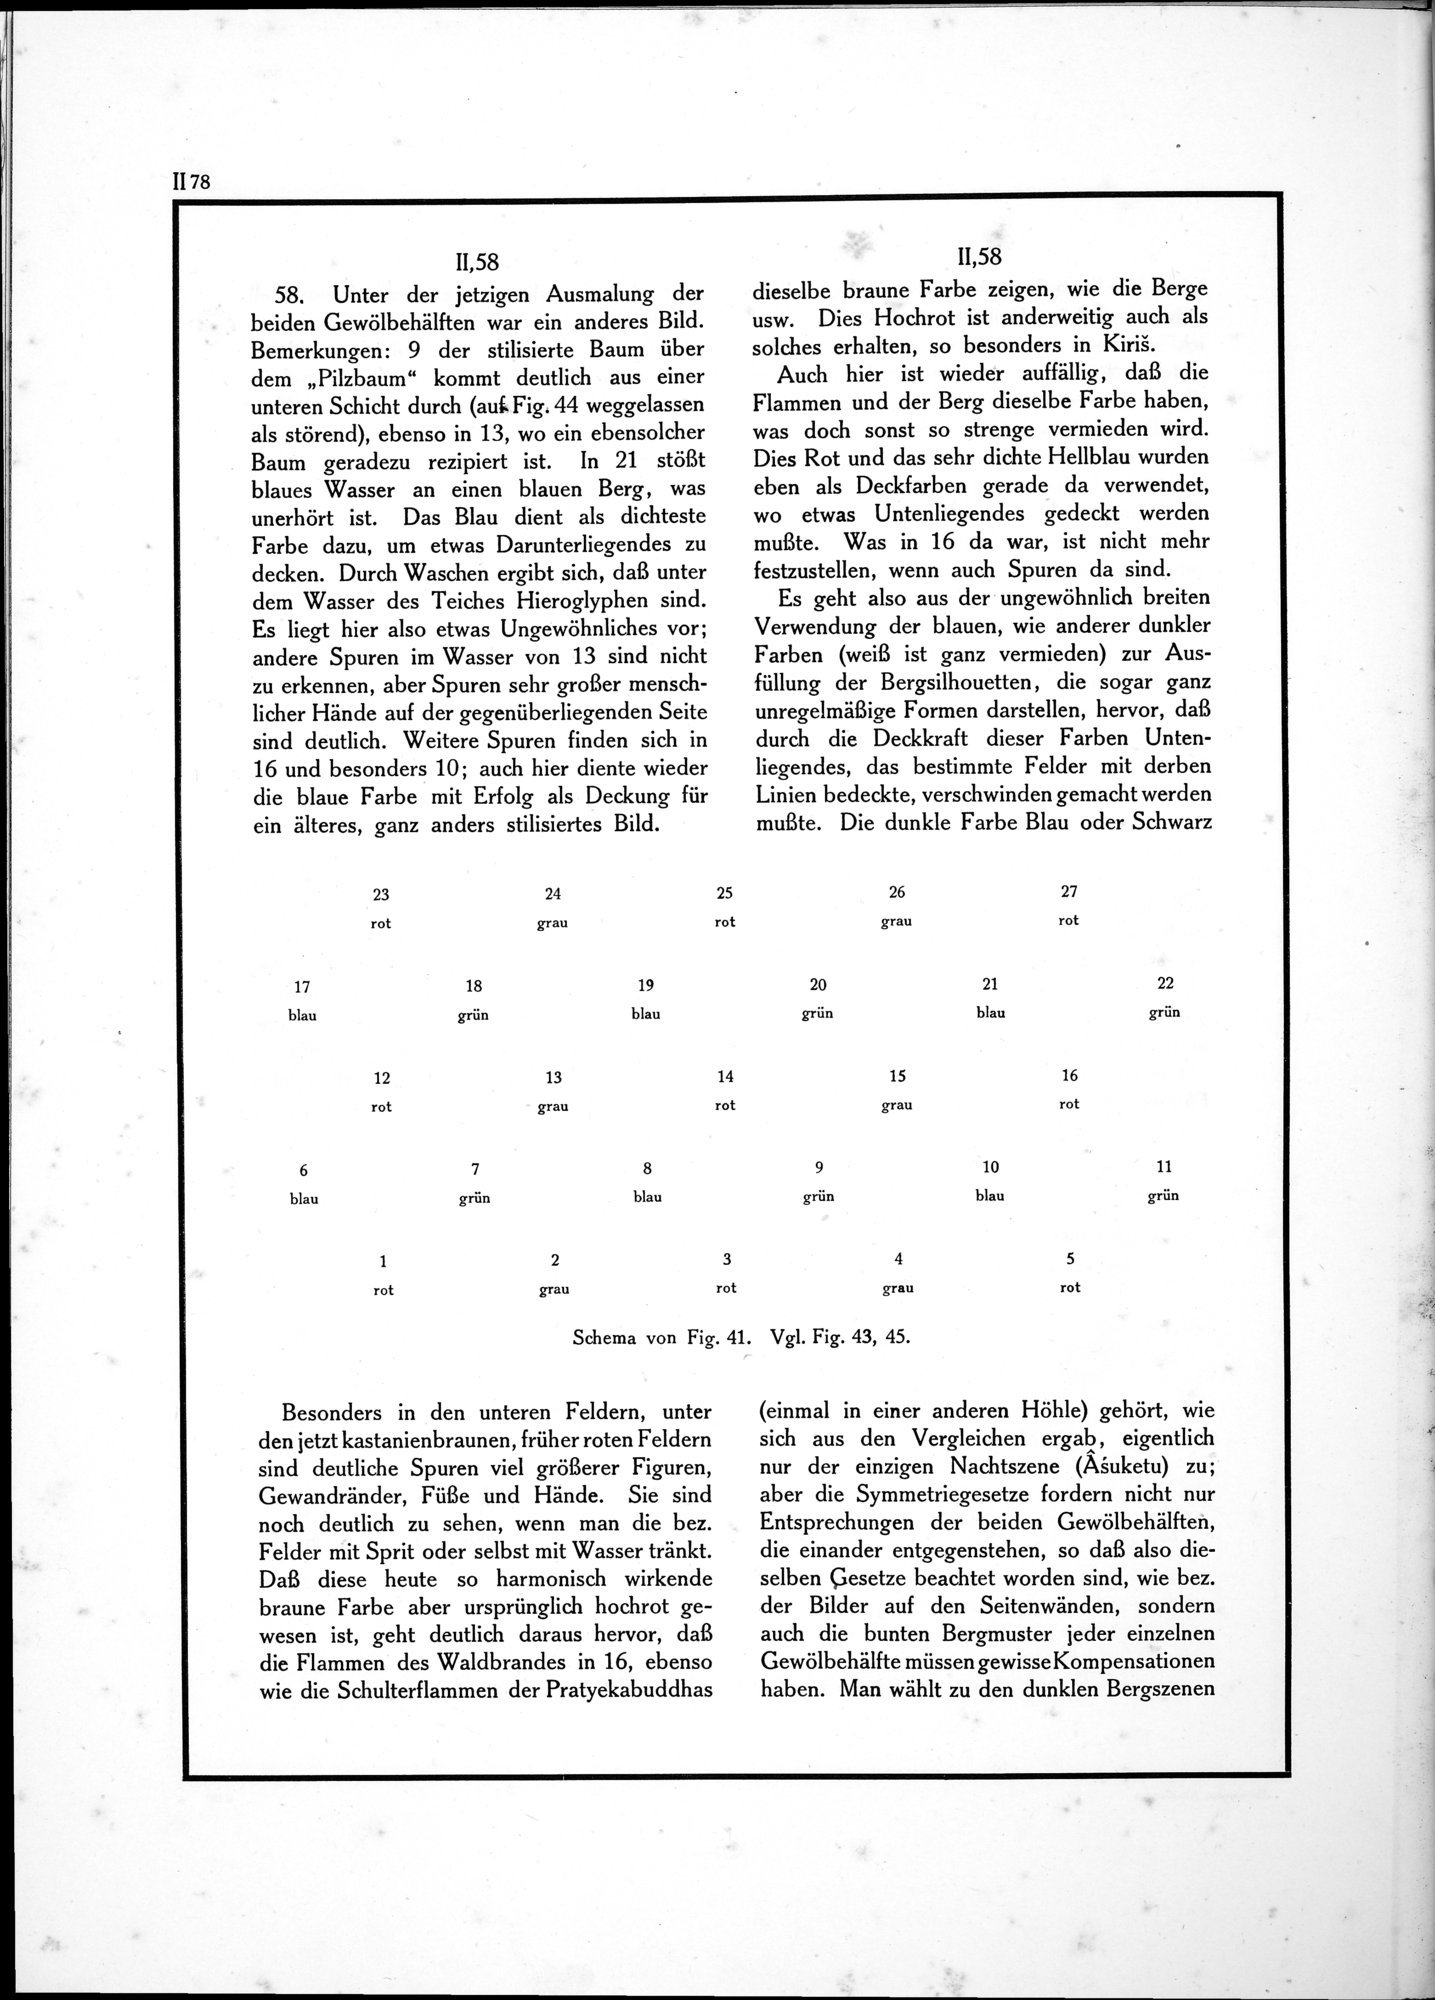 Alt-Kutscha : vol.1 / Page 192 (Grayscale High Resolution Image)